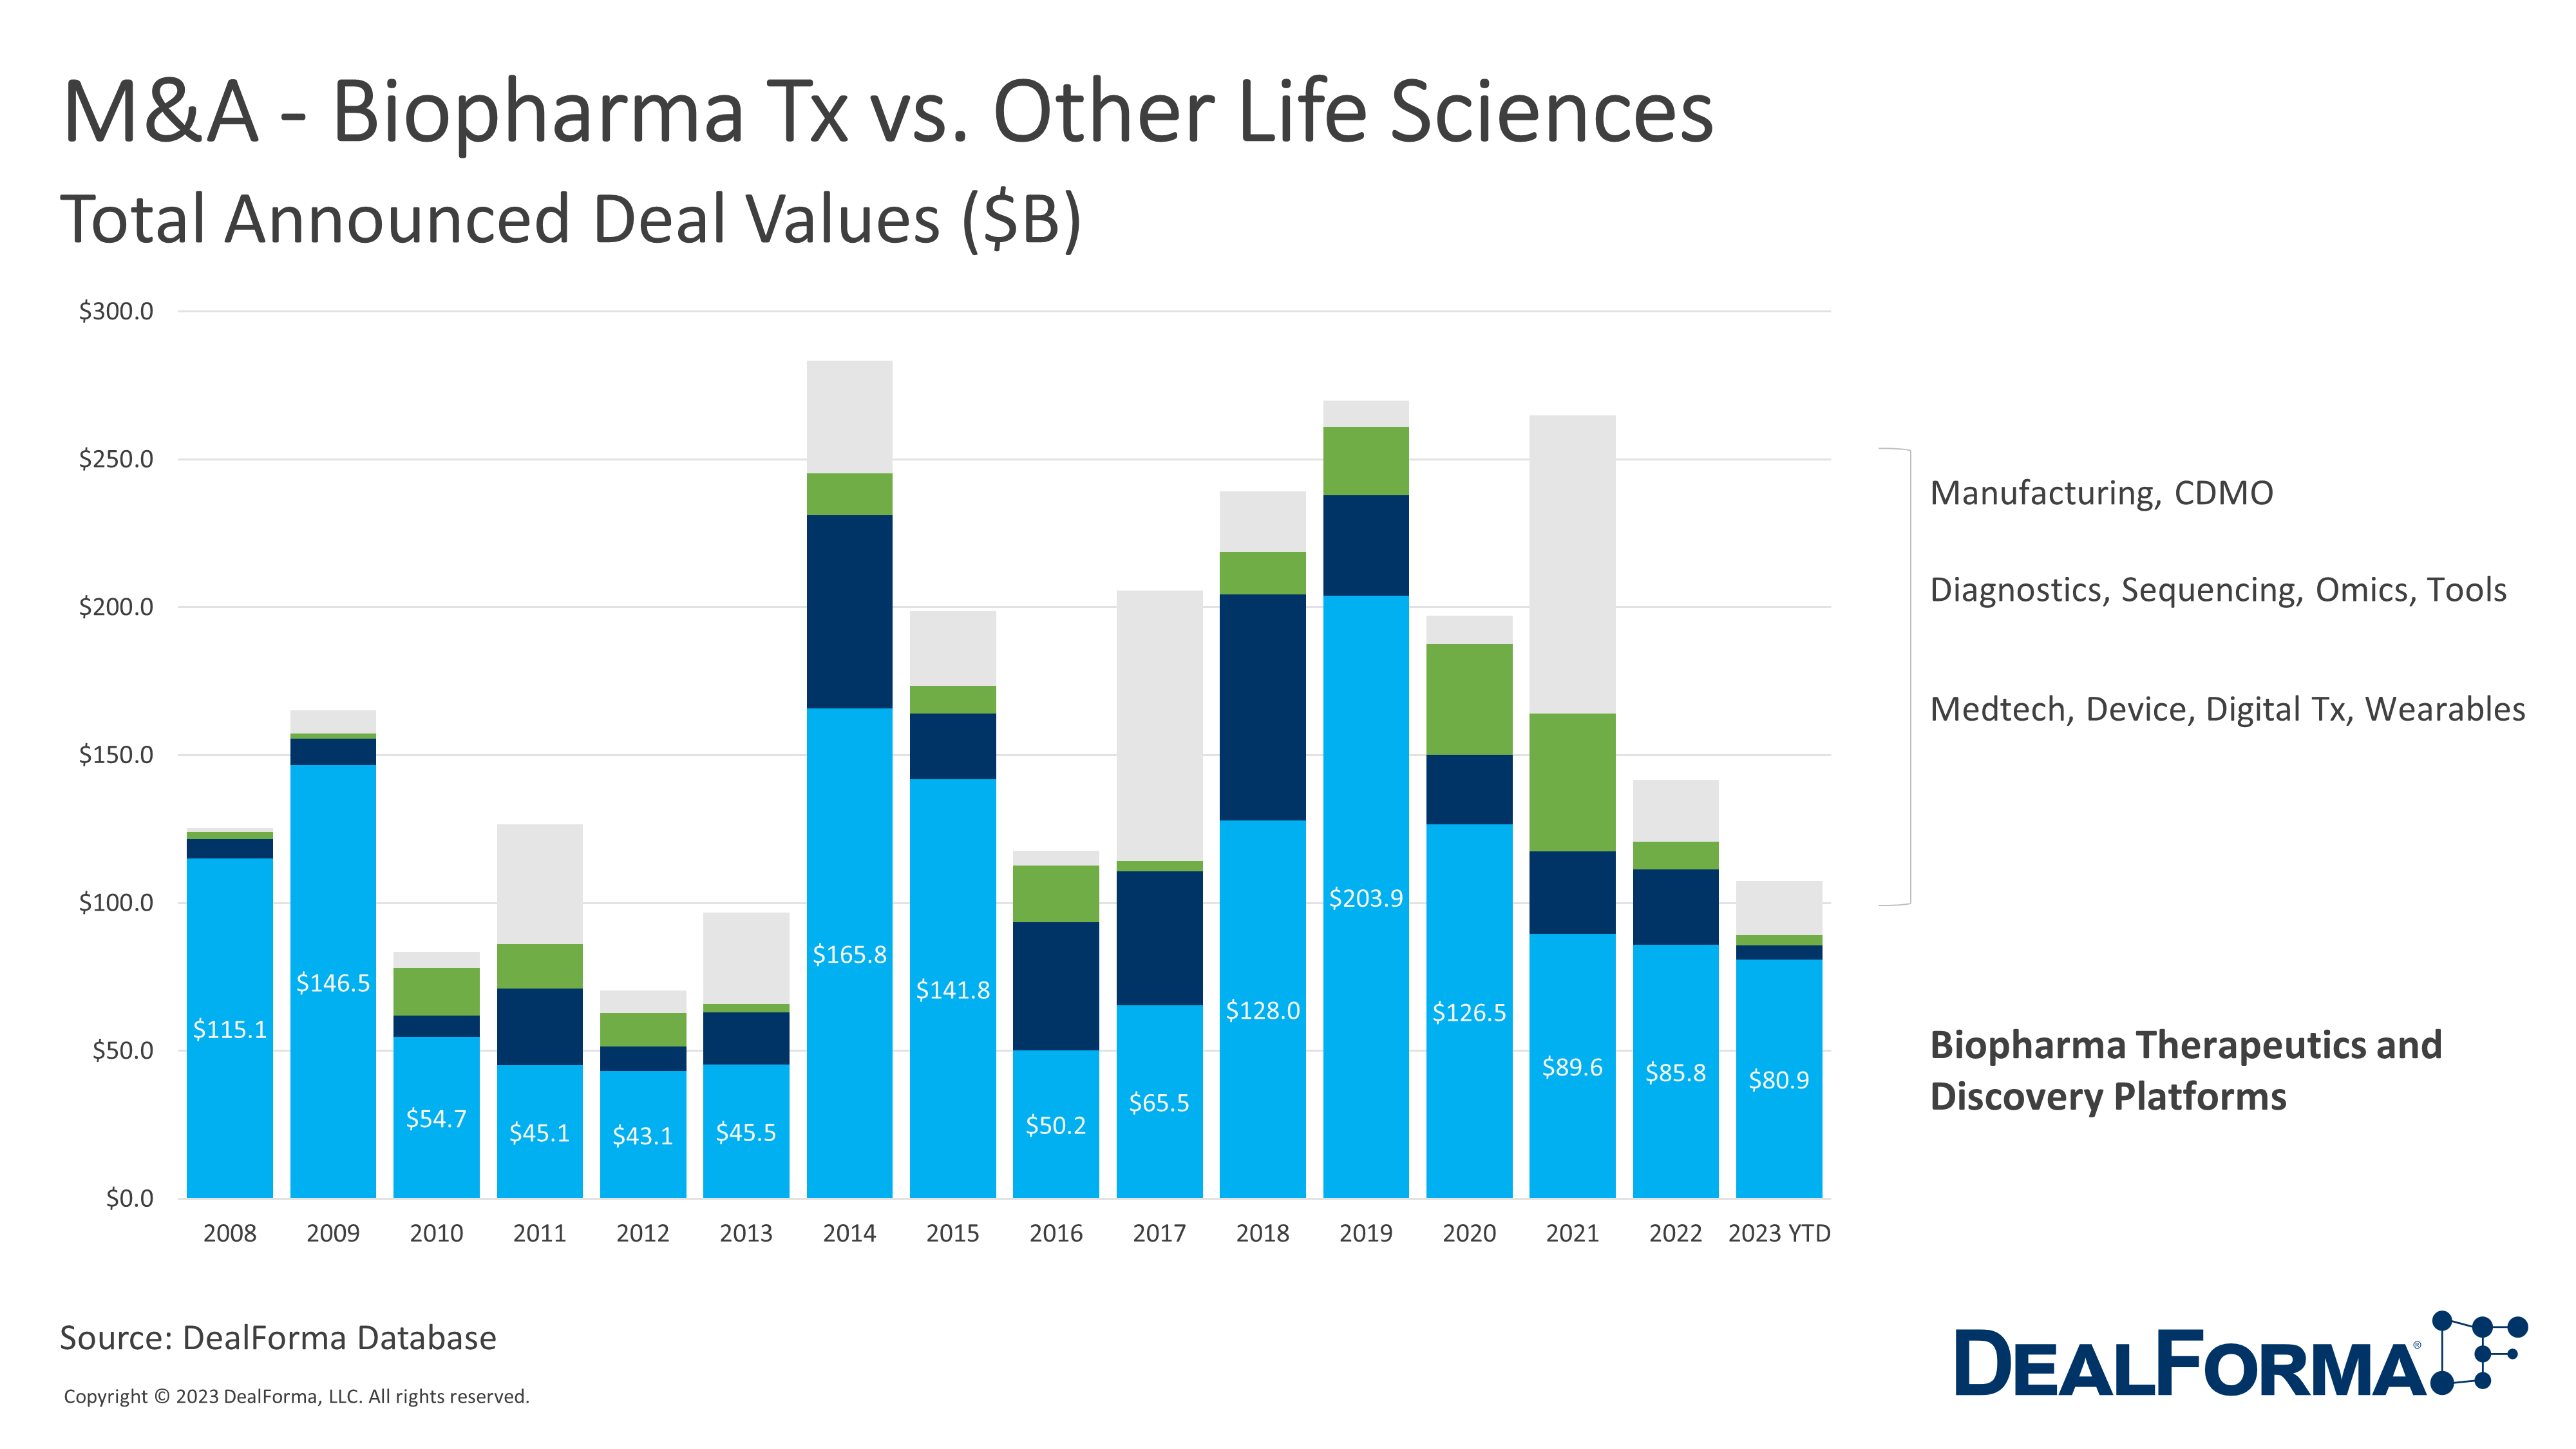 M&A - Biopharma Tx vs. Other Life Sciences. DealForma